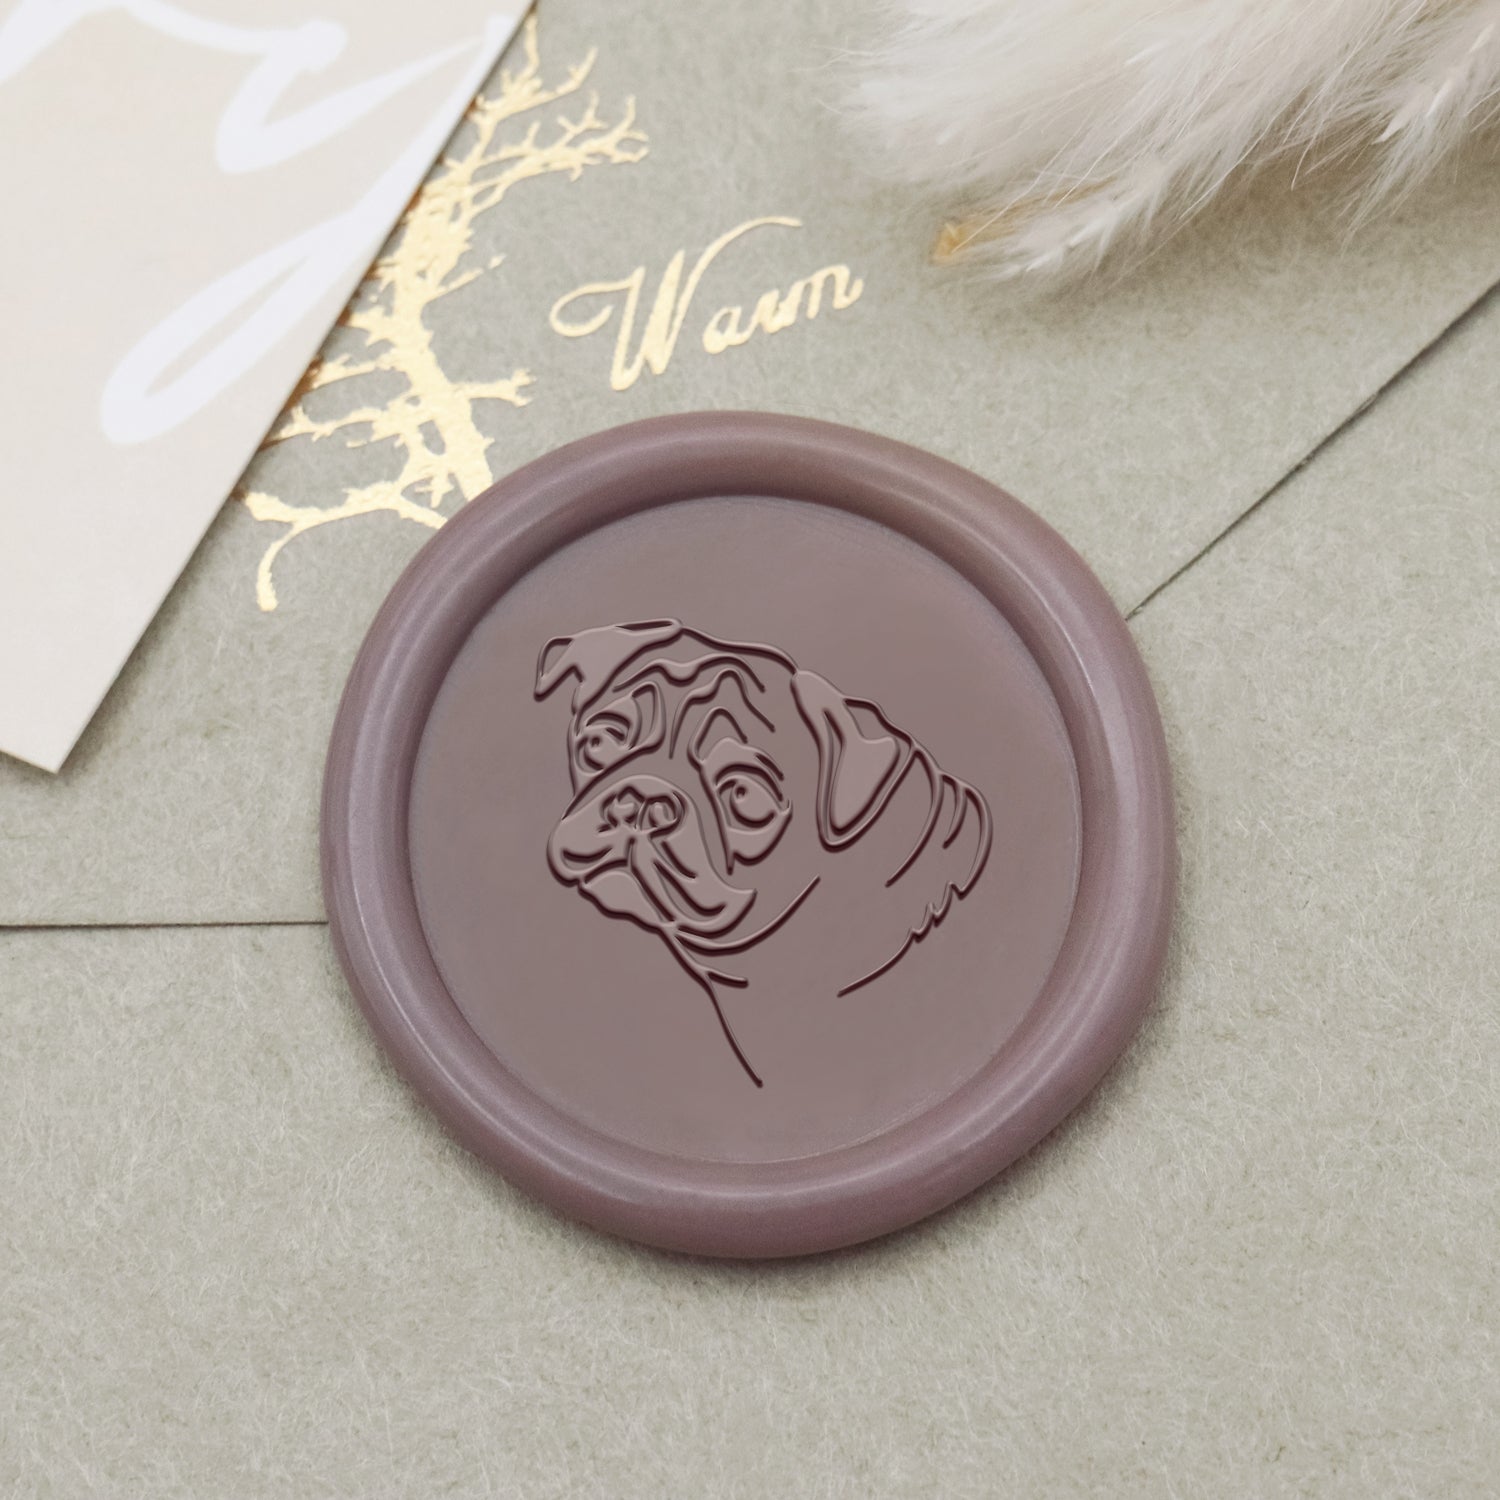 Pug Dog Wax Seal Stamp - Stamprints1